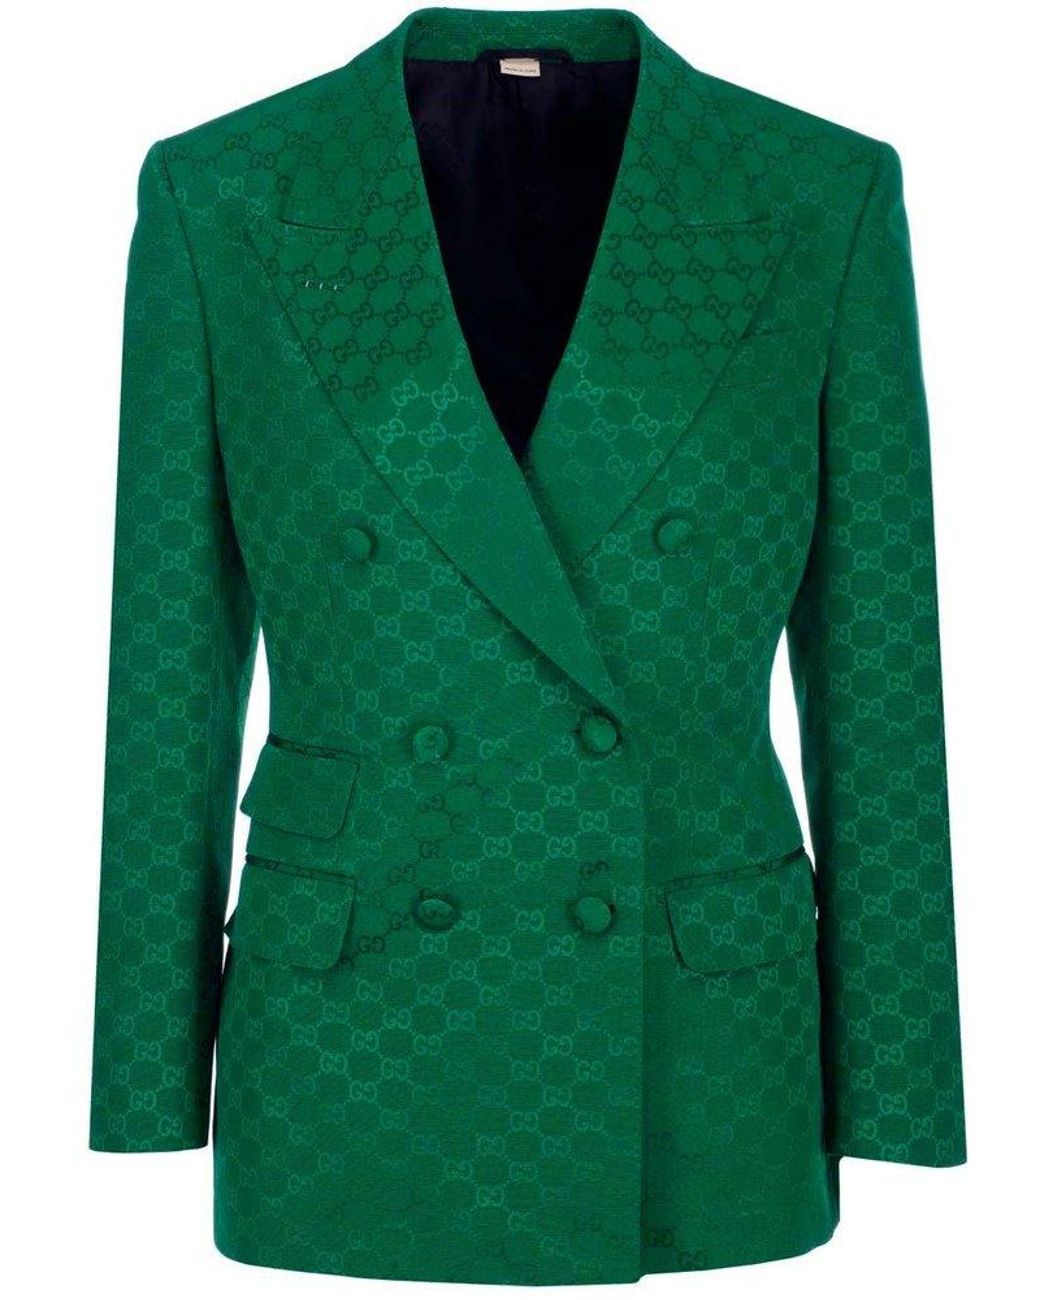 Gucci Blazers & Suit Jackets - Women | FASHIOLA.com